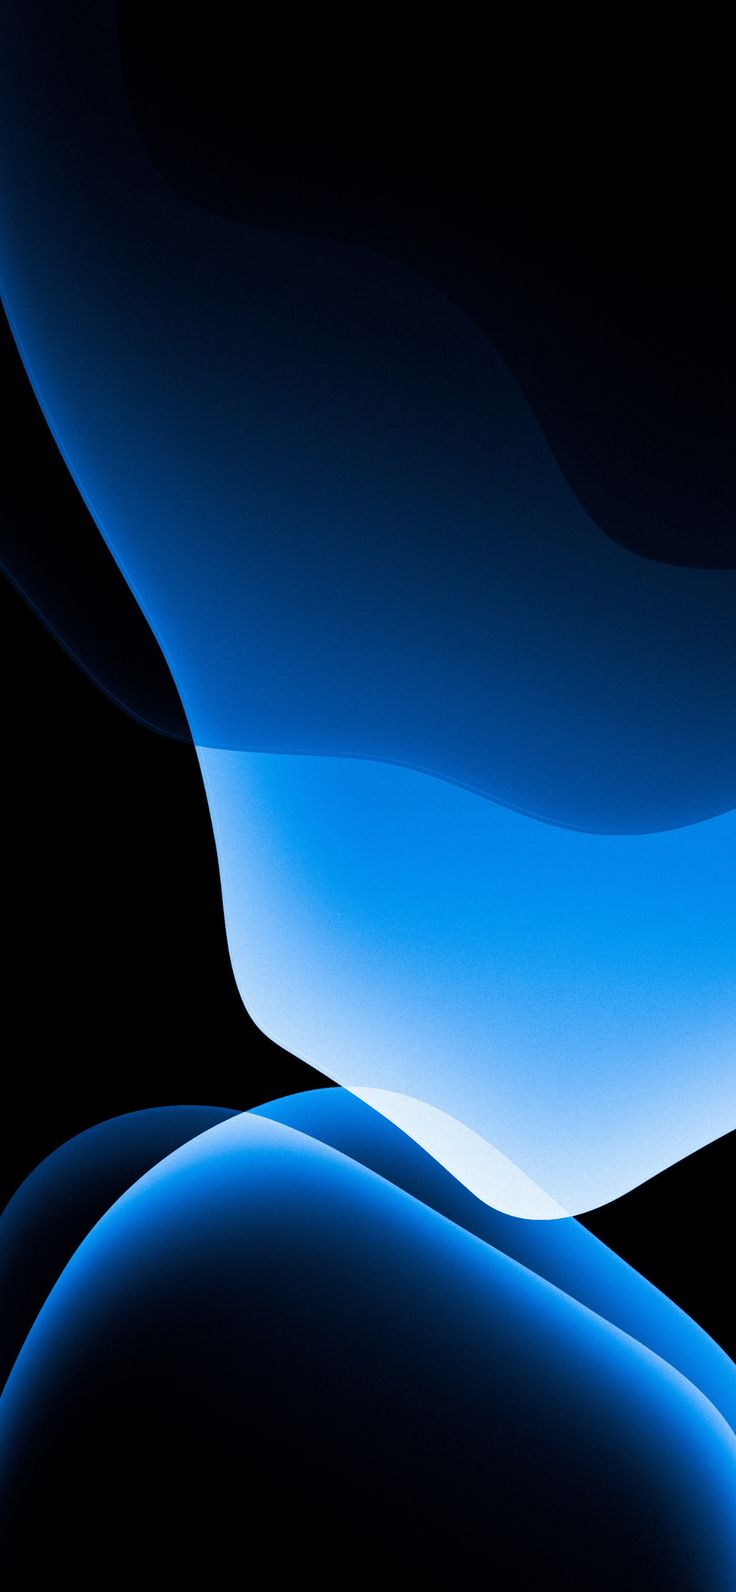 Blue iOS 13 redo on Twitter. New wallpaper iphone, Samsung wallpaper, Original iphone wallpaper